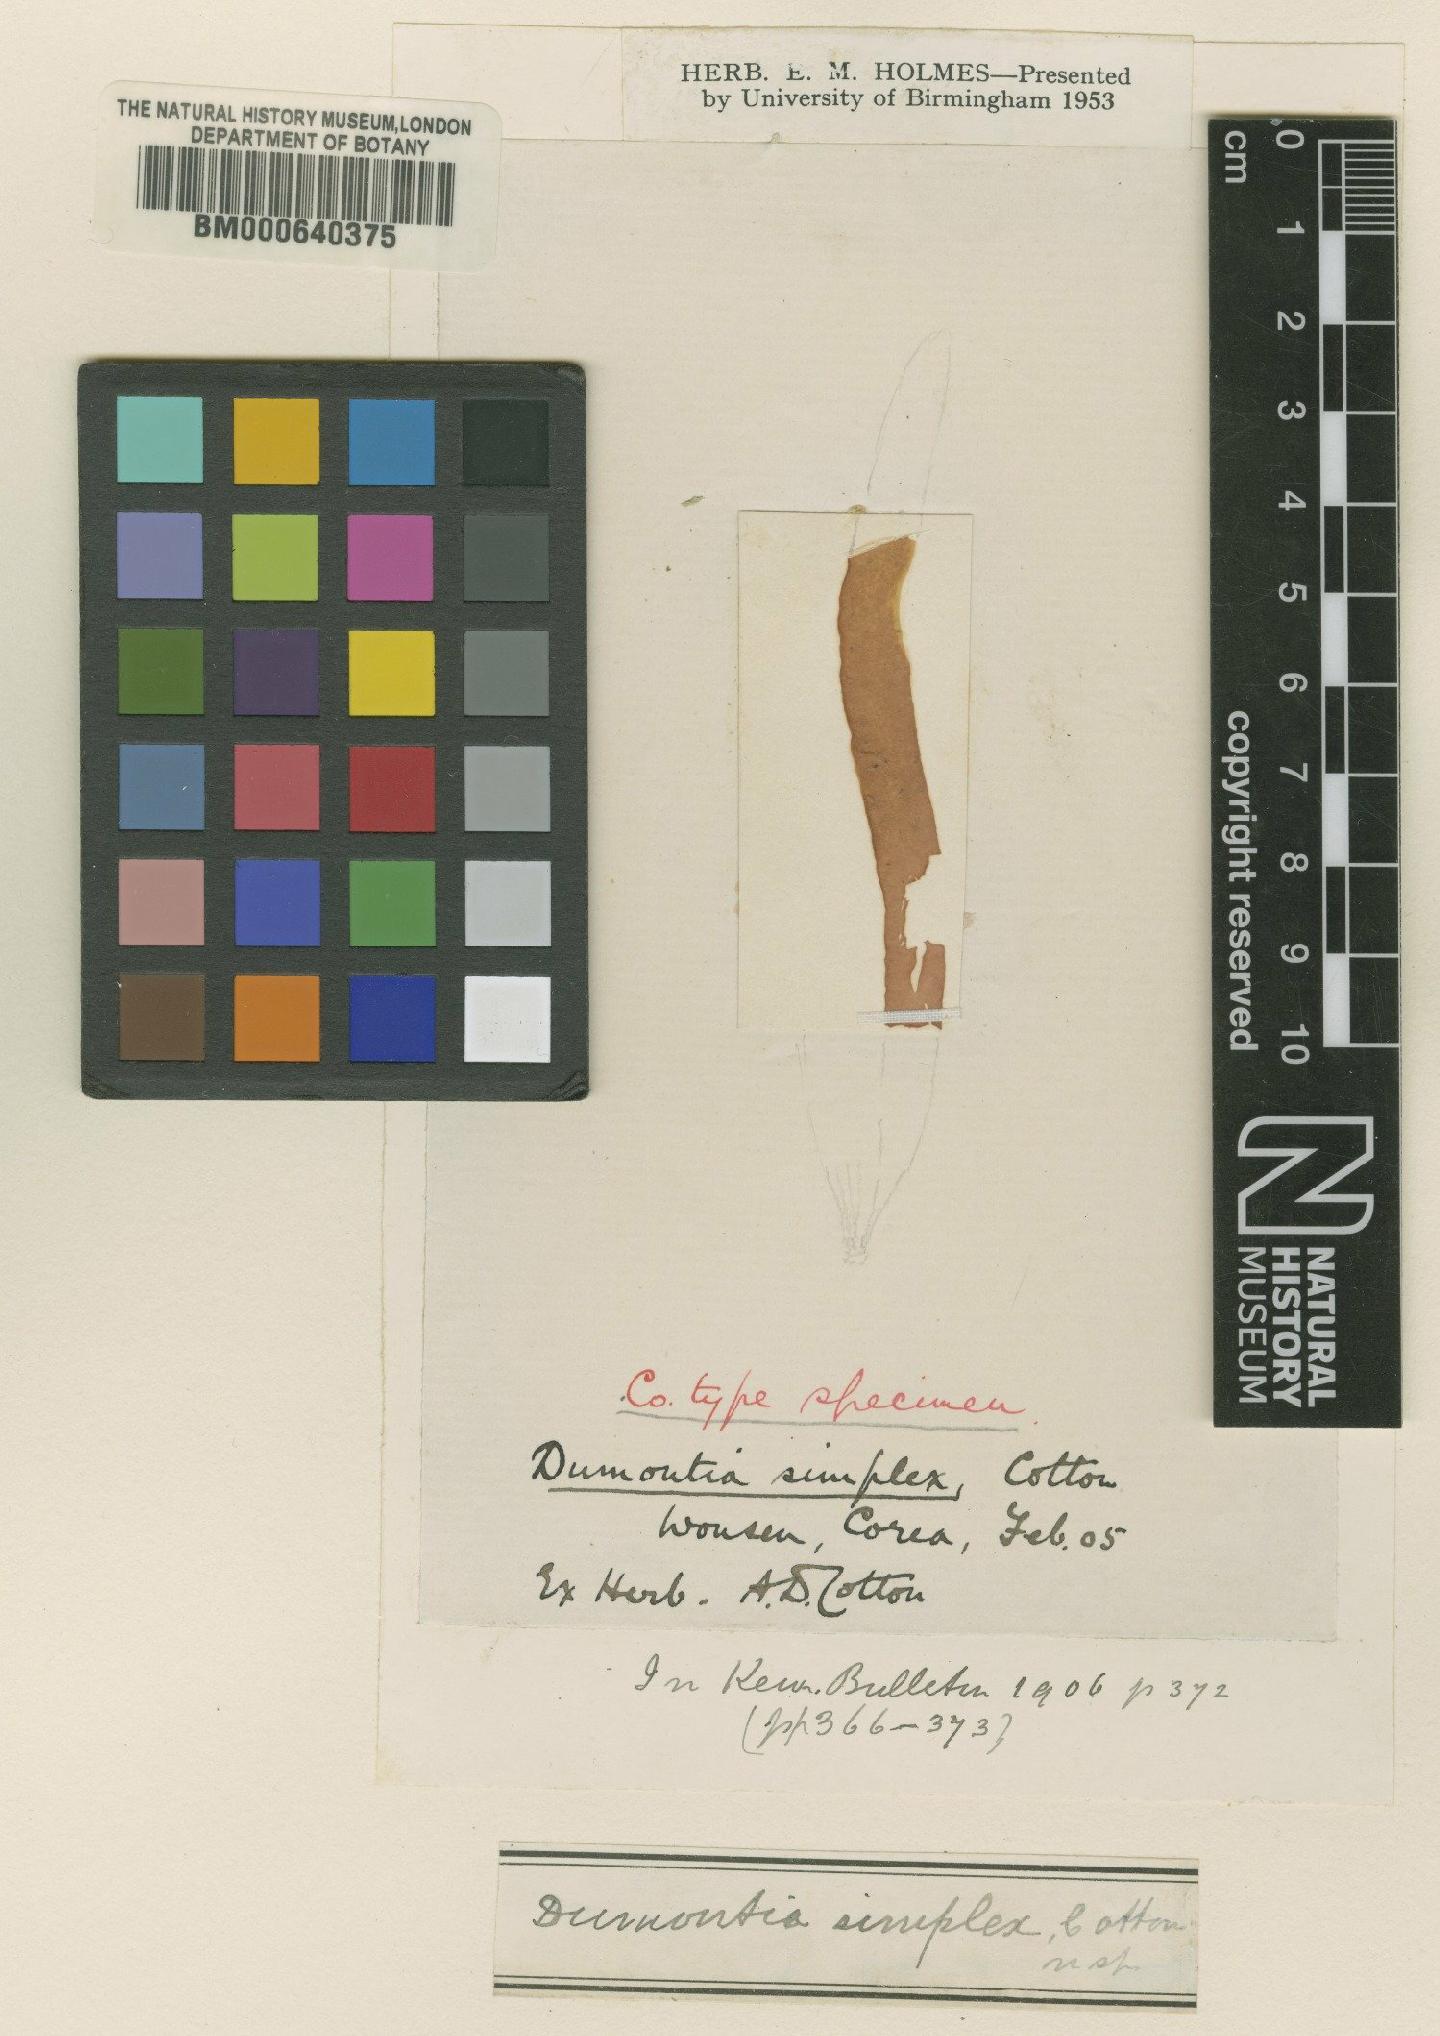 WoRMS - World Register of Marine Species - Dumontia simplex Cotton, 1906